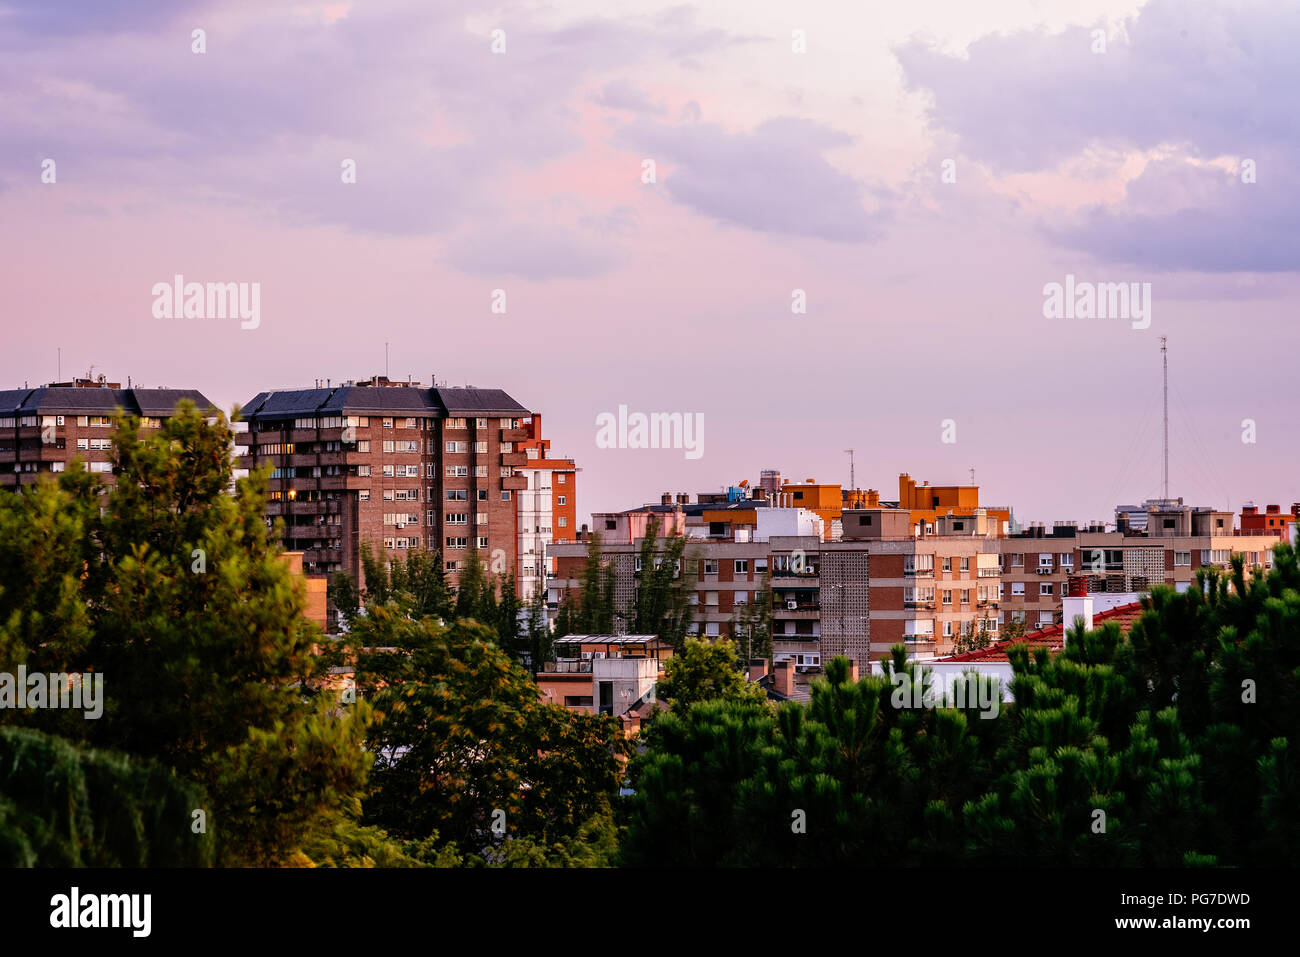 Cityscape of residential area of Madrid at sunset. Arturo Soria quarter Stock Photo